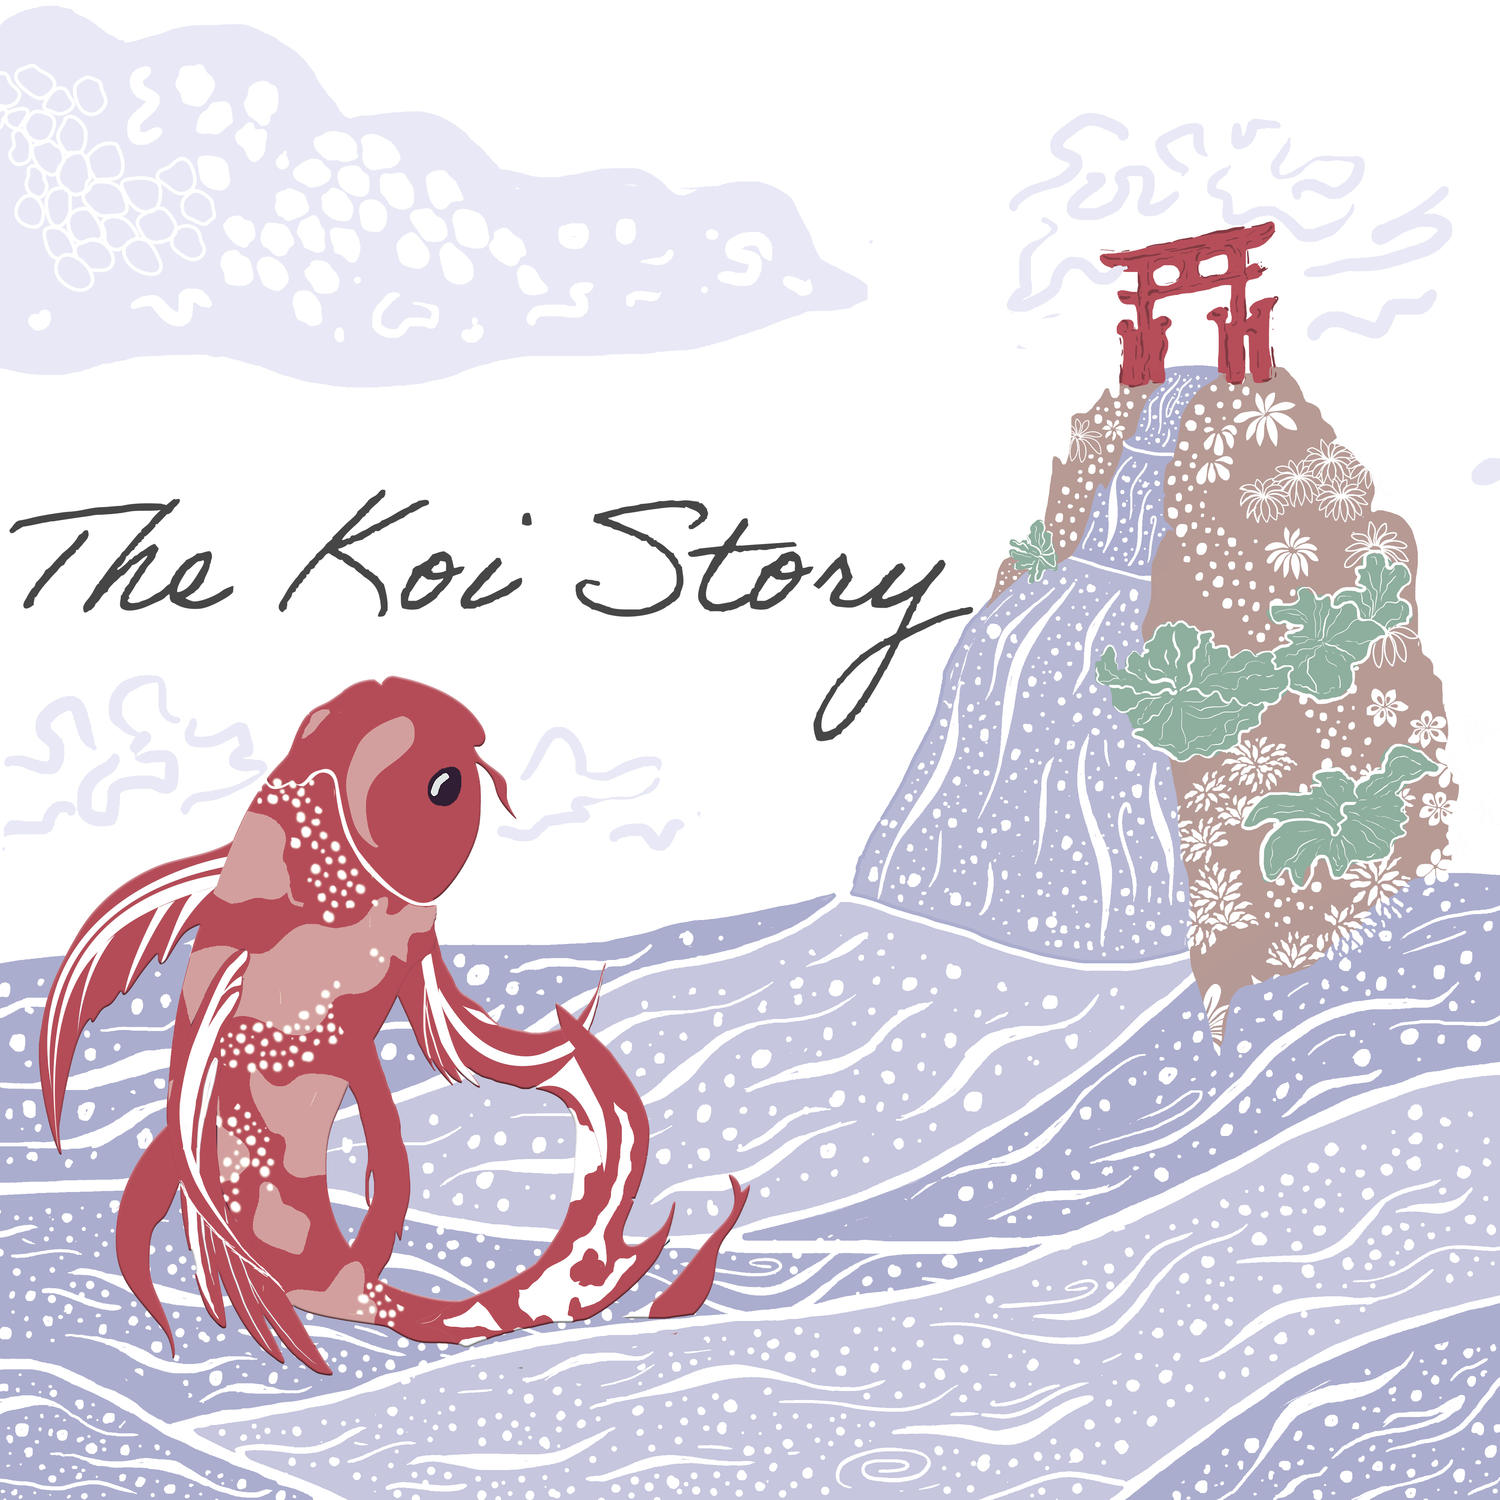 THE KOI STORY